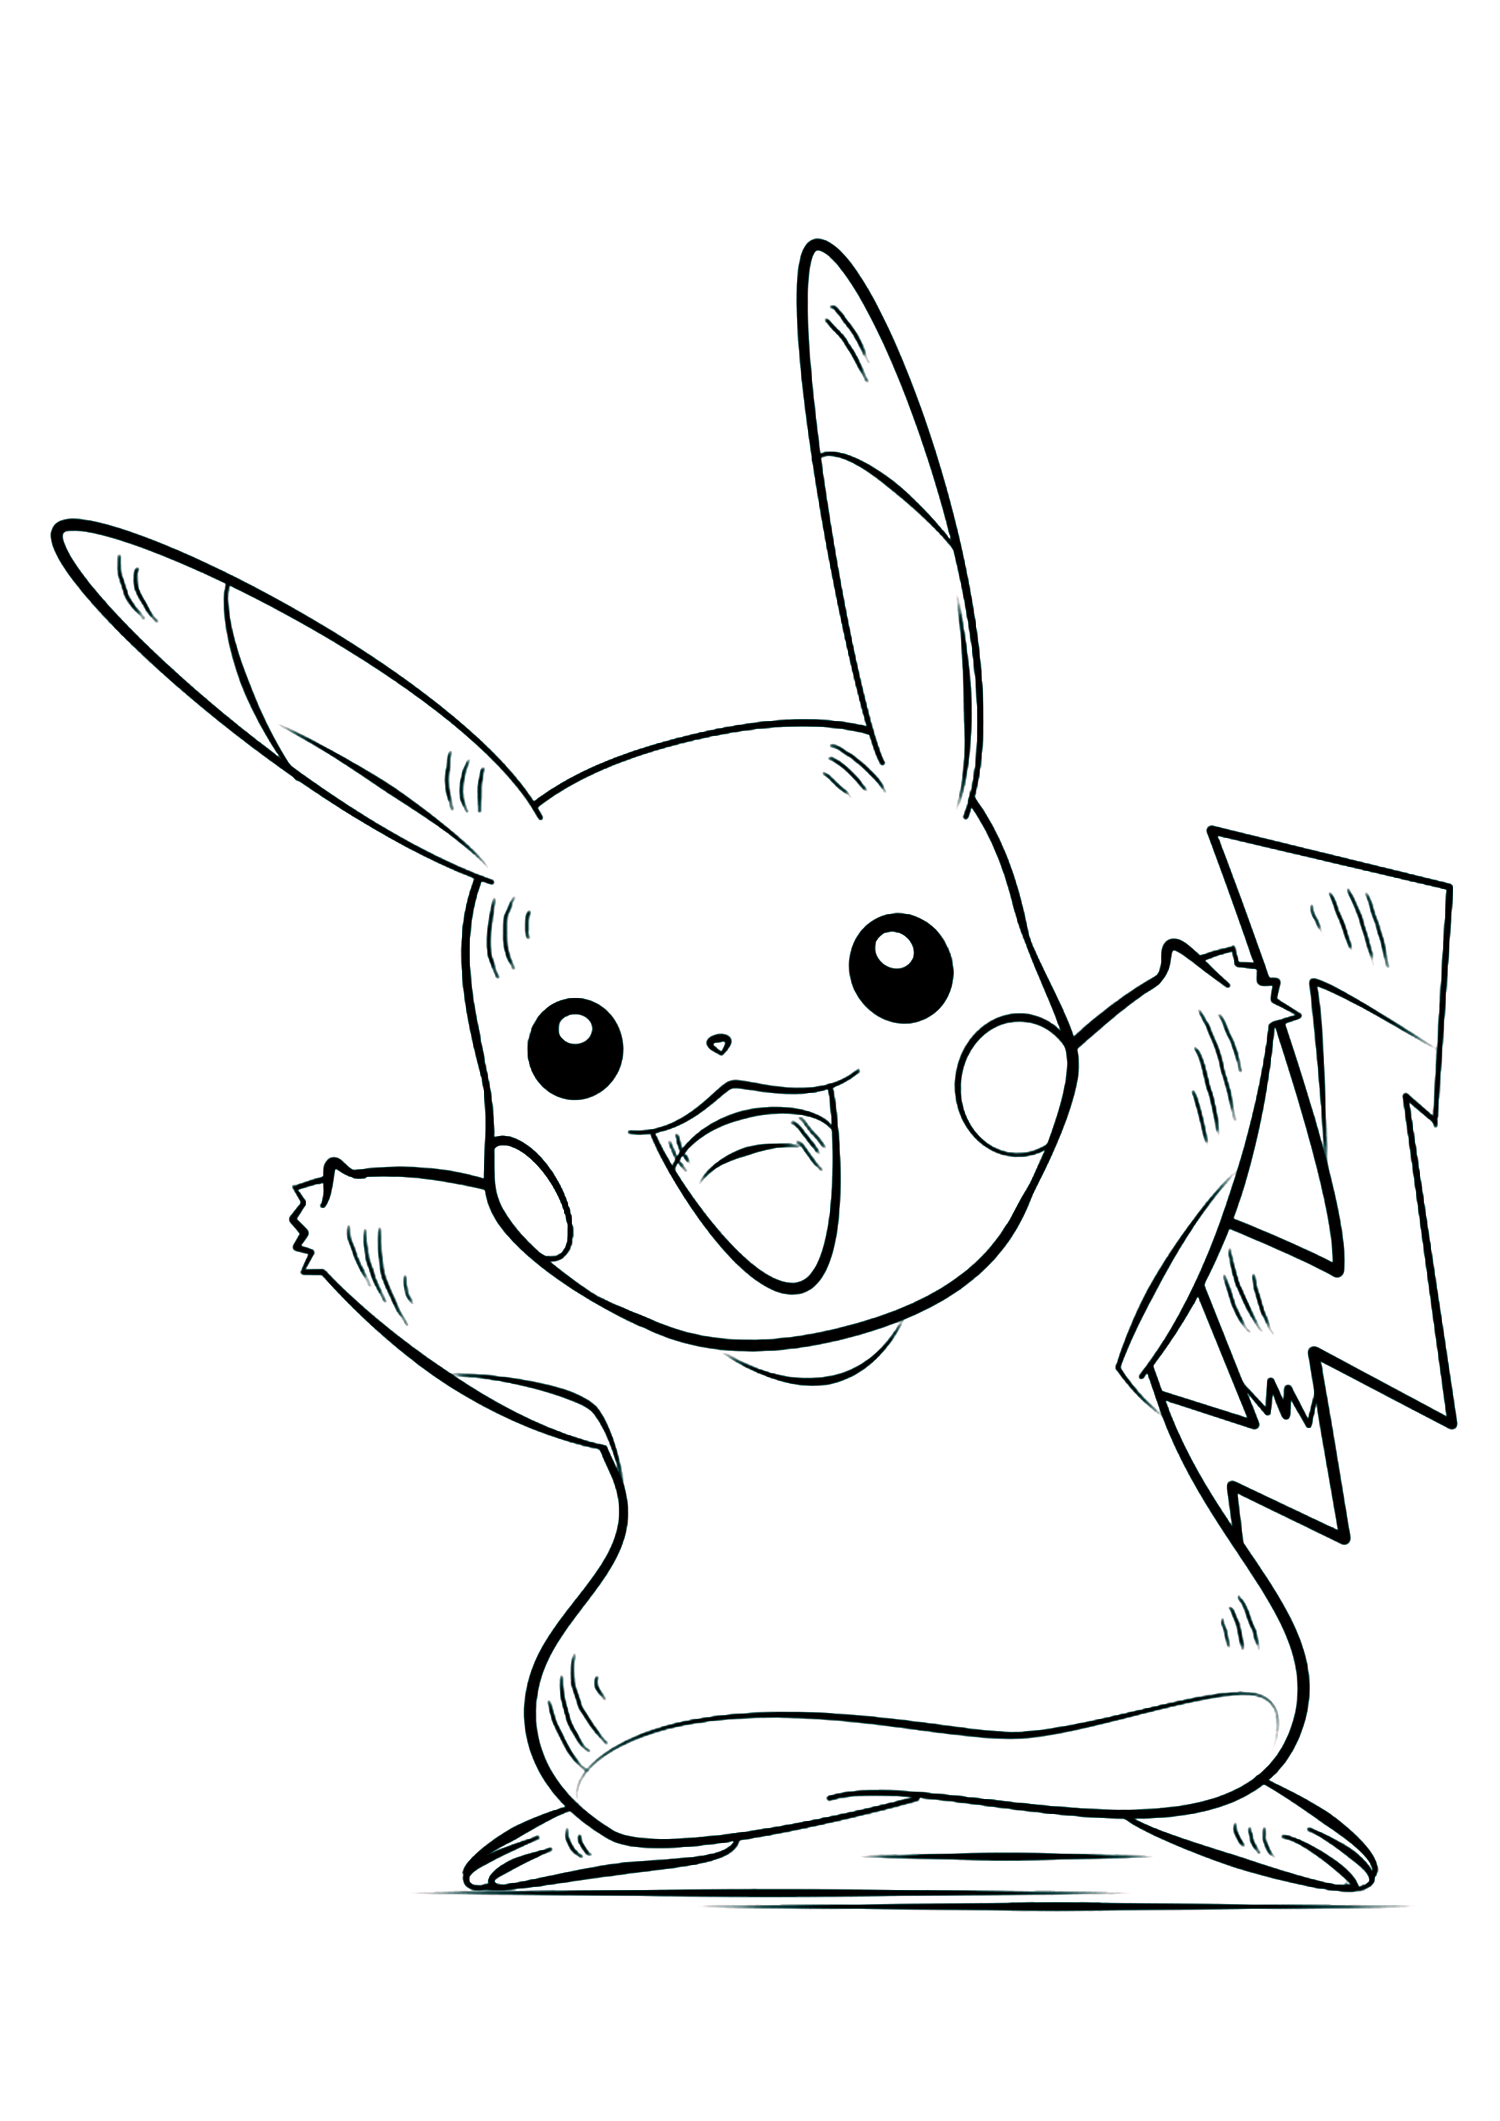 Pikachu (Nº.25). Pikachu coloring (Pikachu), Pokémon of Generation I, type: ElectrikPermission: Todos os direitos reservados © Pokémon company e Ken Sugimori.